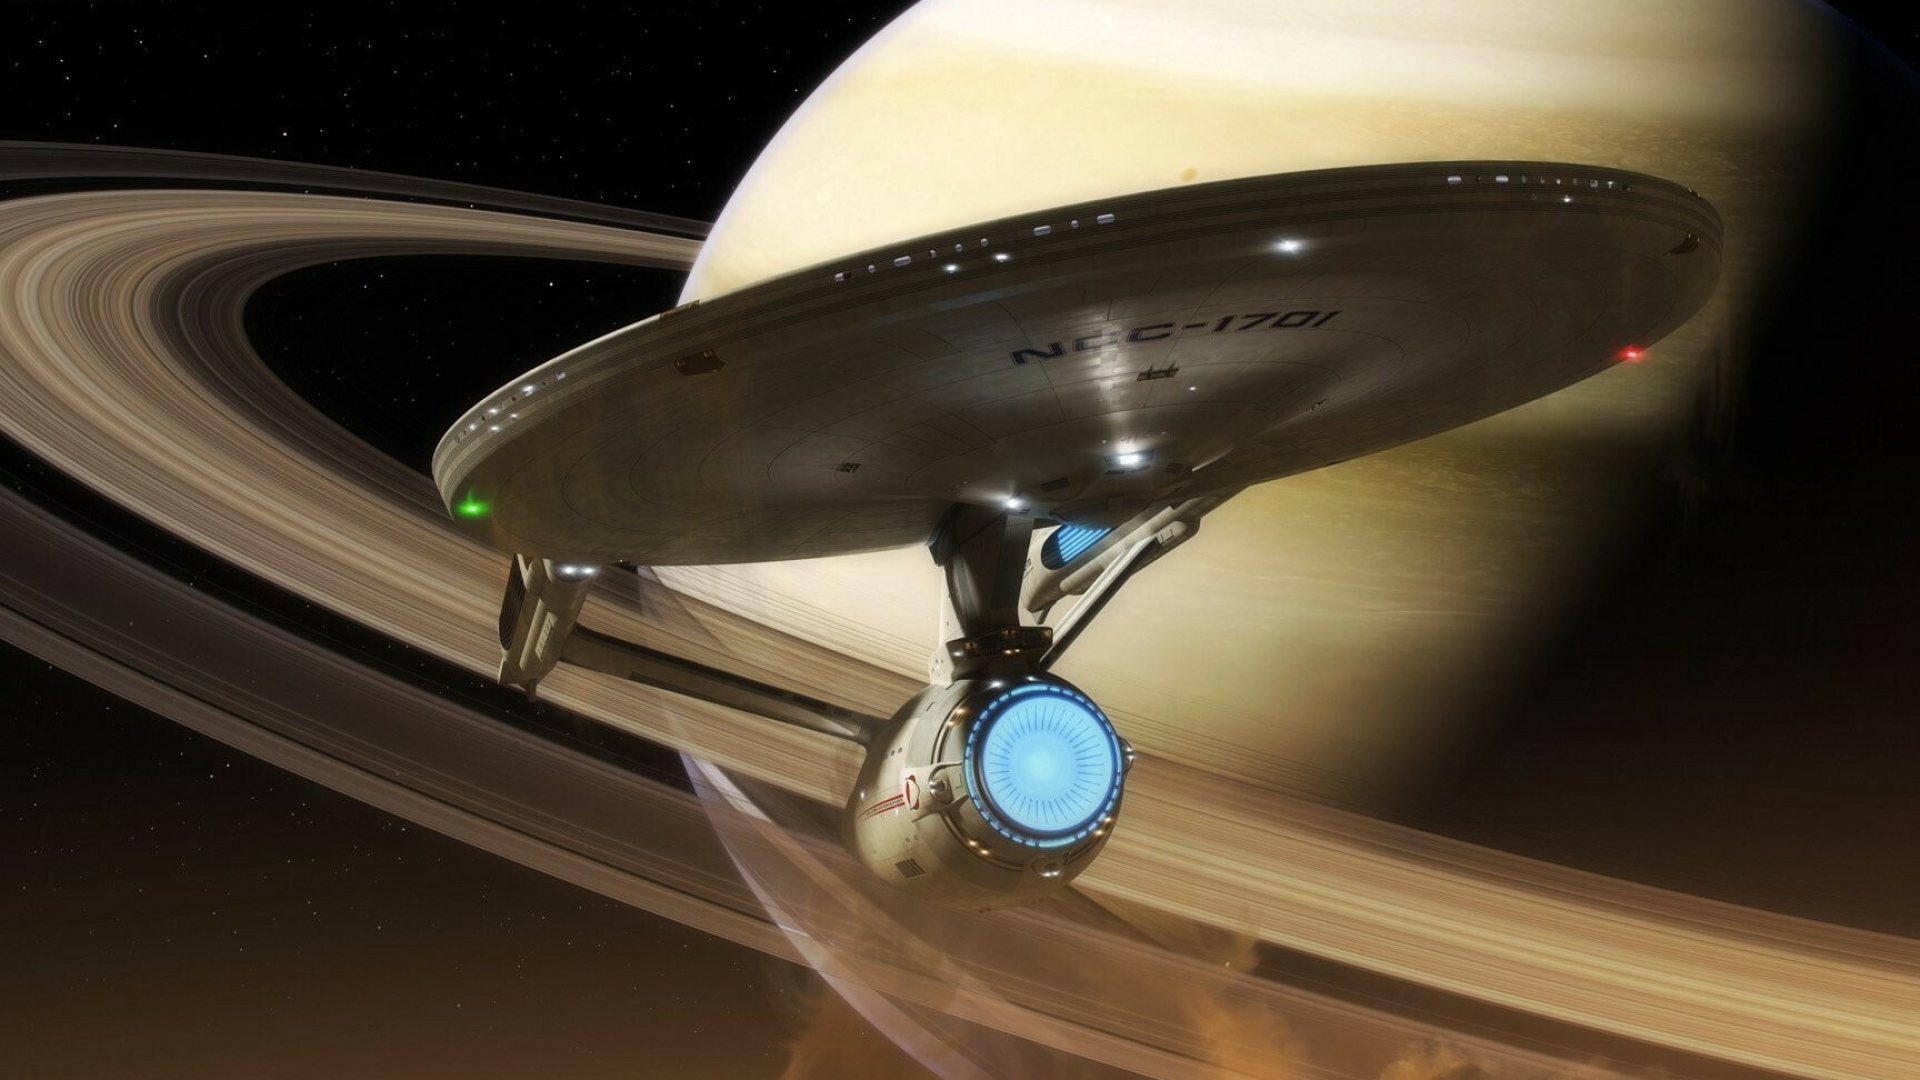 Star Trek: A Federation Constitution-class starship. 1920x1080 Full HD Wallpaper.